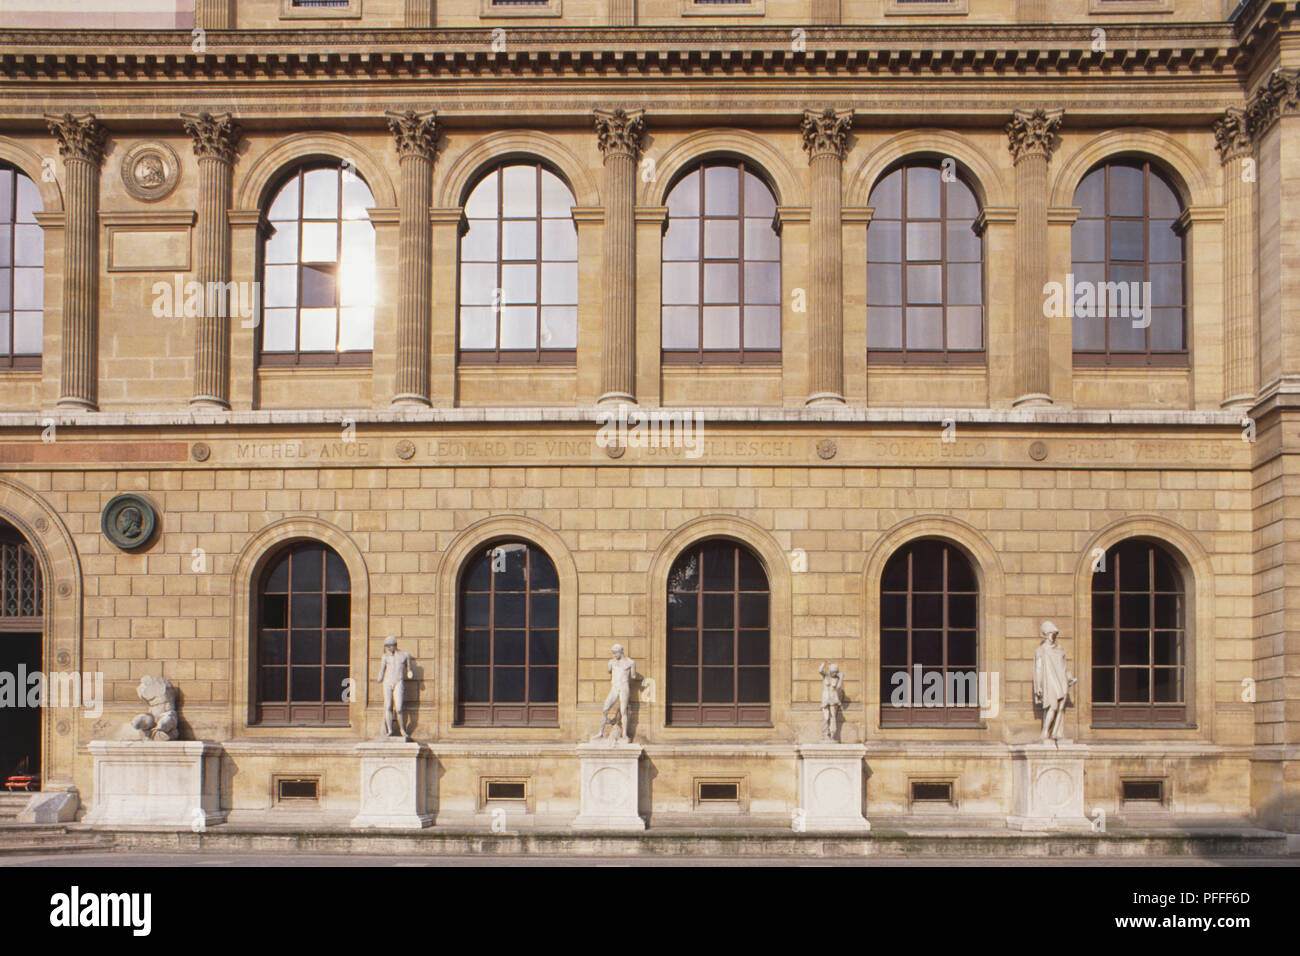 Francia, Parigi, San-Germain-des-Pres, Ecole Nationale Superieure des Beaux-arts, facciata del college con finestre ad arco e statue. Foto Stock